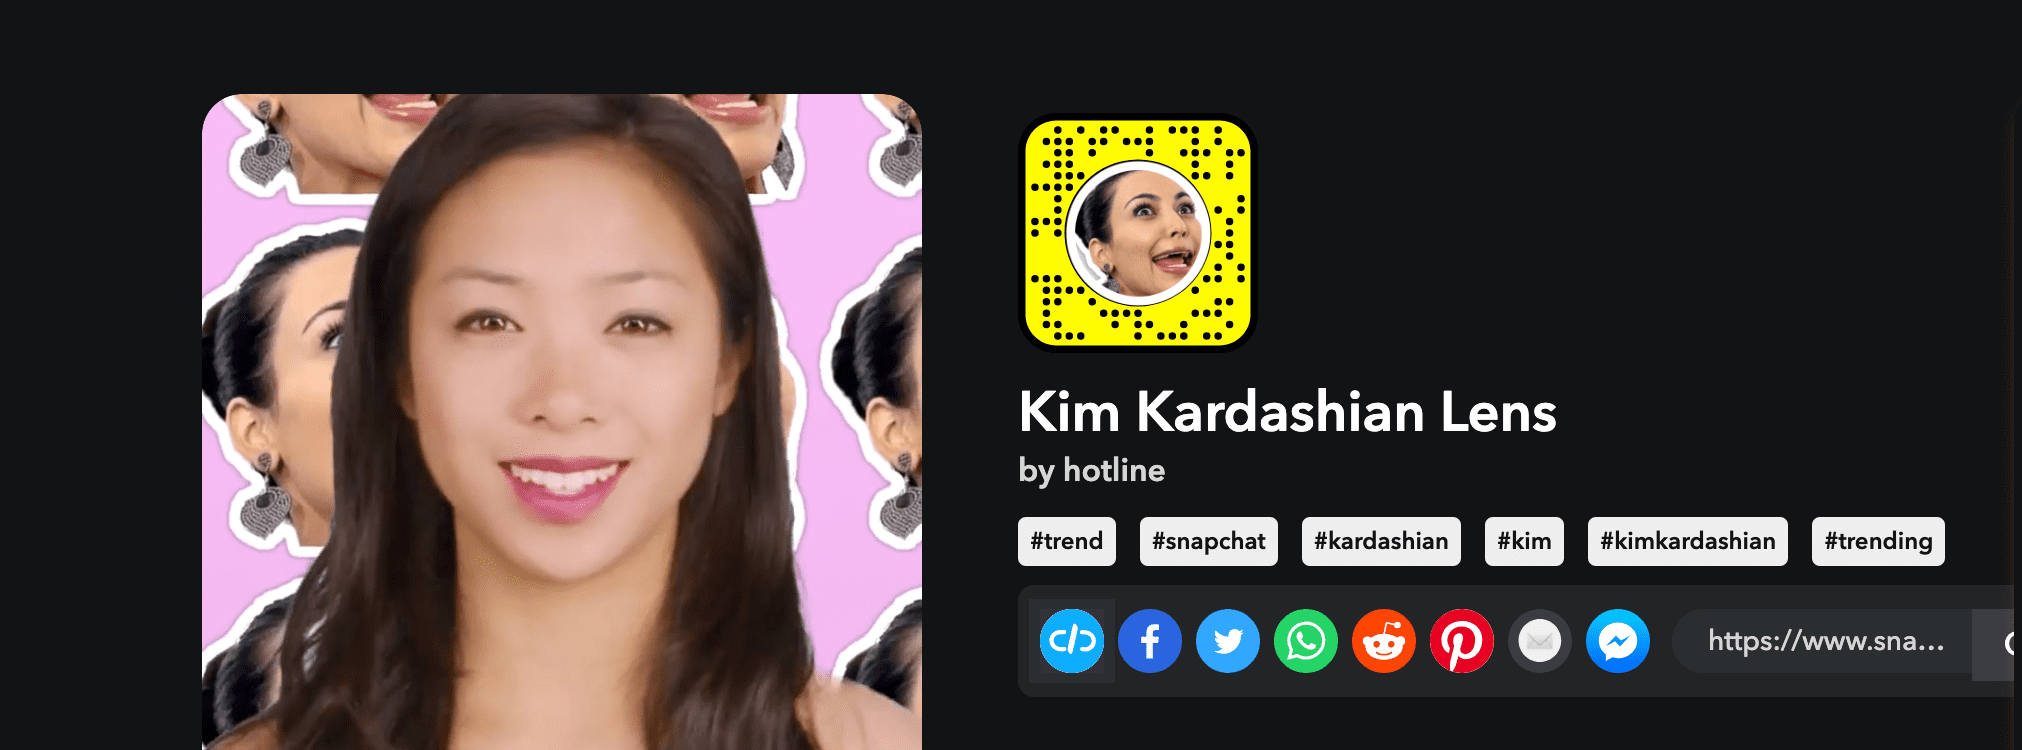 Kim Kardashian Lens by hotline